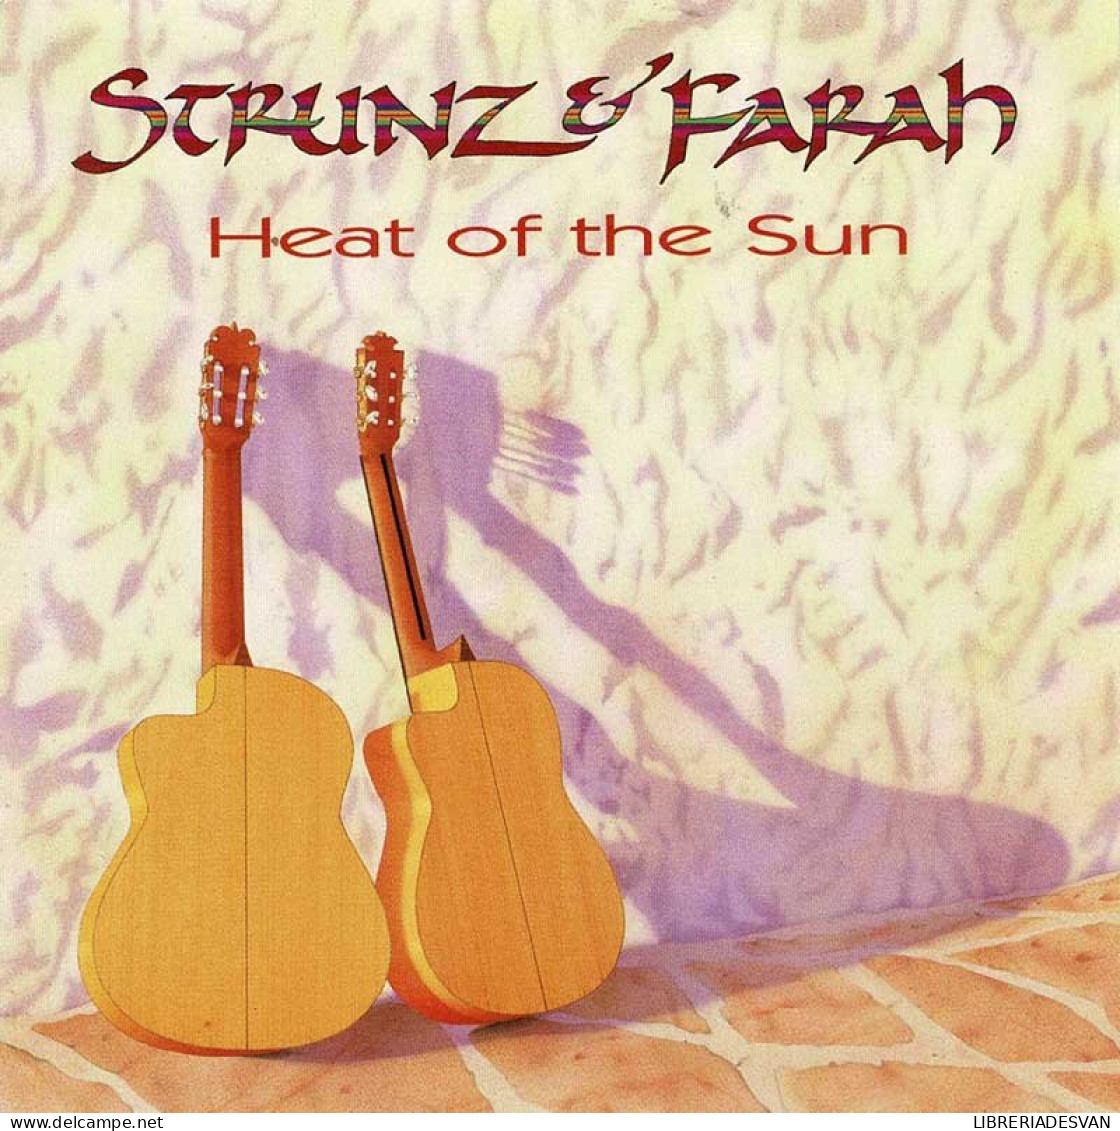 Strunz & Farah - Heat Of The Sun. CD - Other - Spanish Music